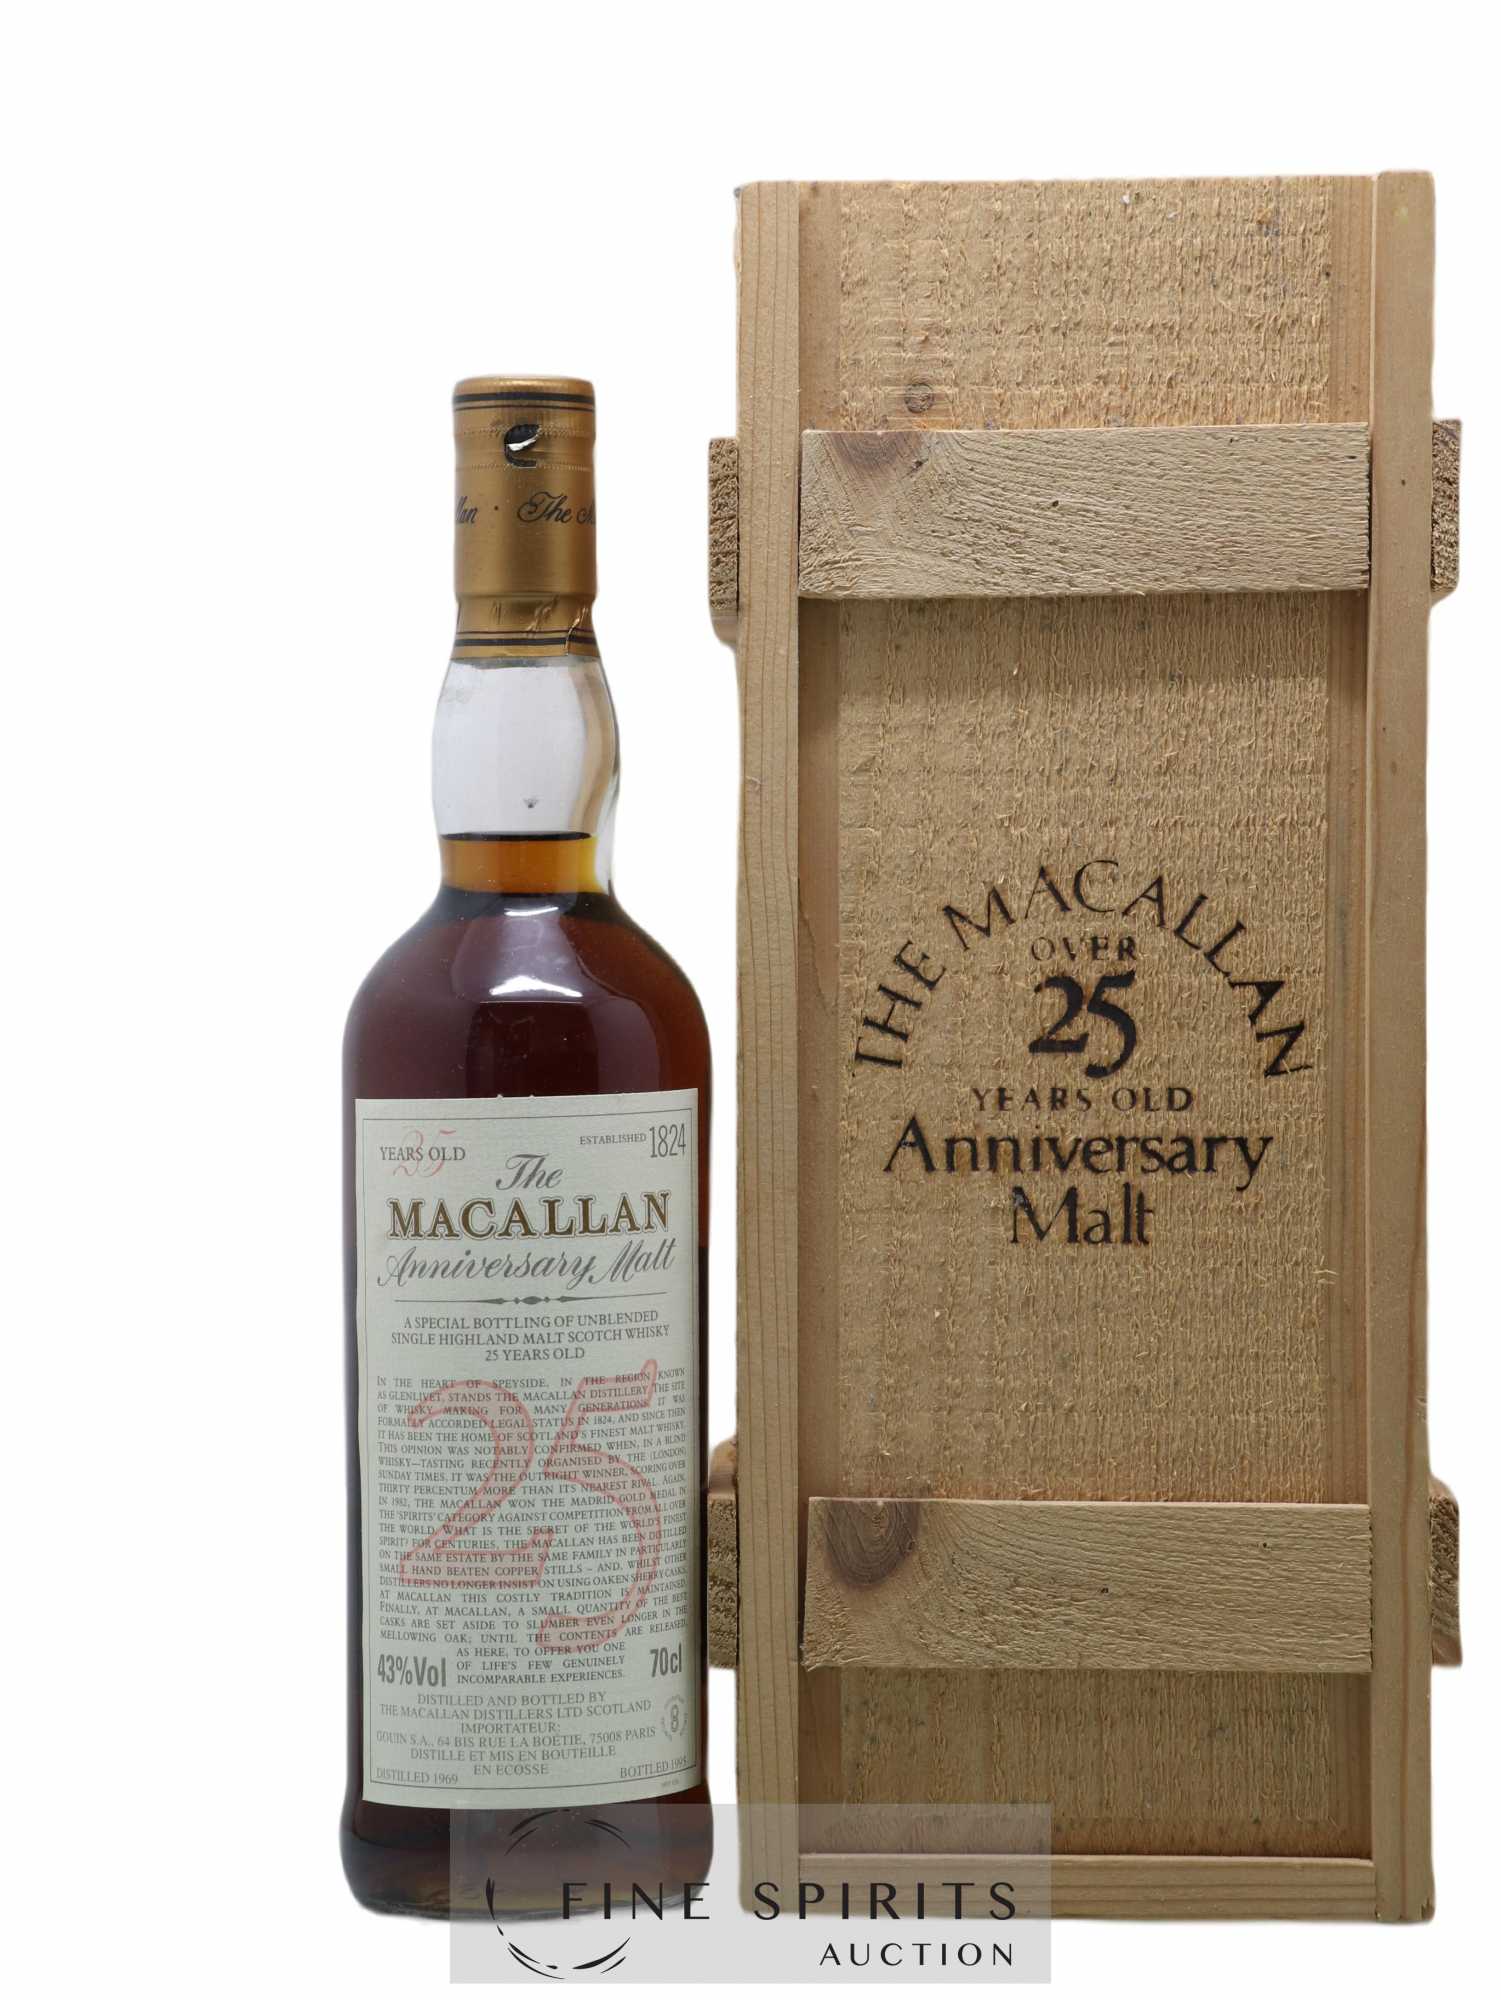 Macallan (The) 25 years 1969 Of. Anniversary Malt bottled 1995 Special Bottling 